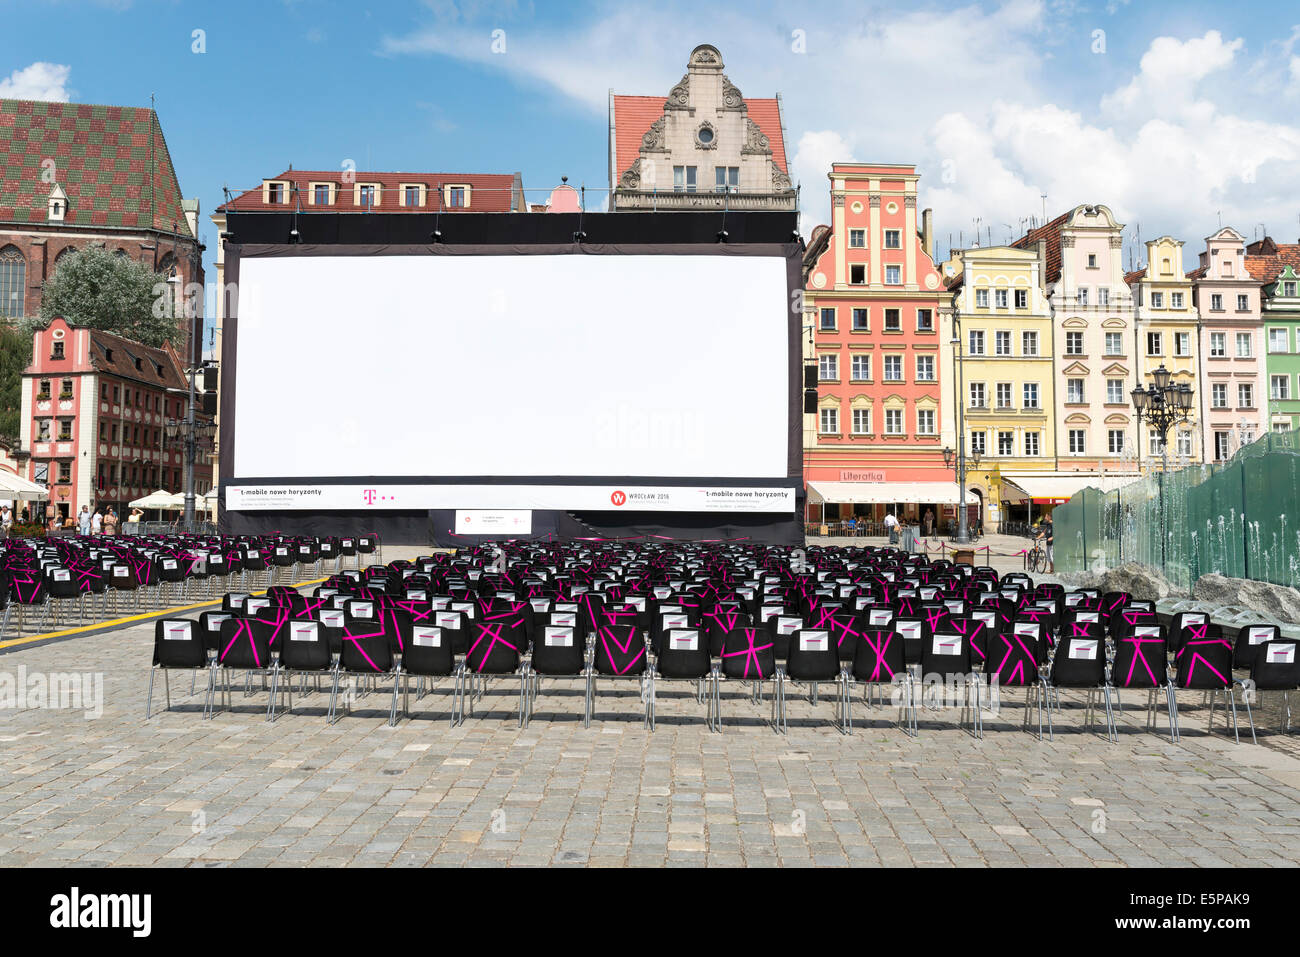 Leeren Kino vor der Show am Abend im Rahmen der New Horizons Kino, Polen s Largest Arthouse-Kino. Stockfoto